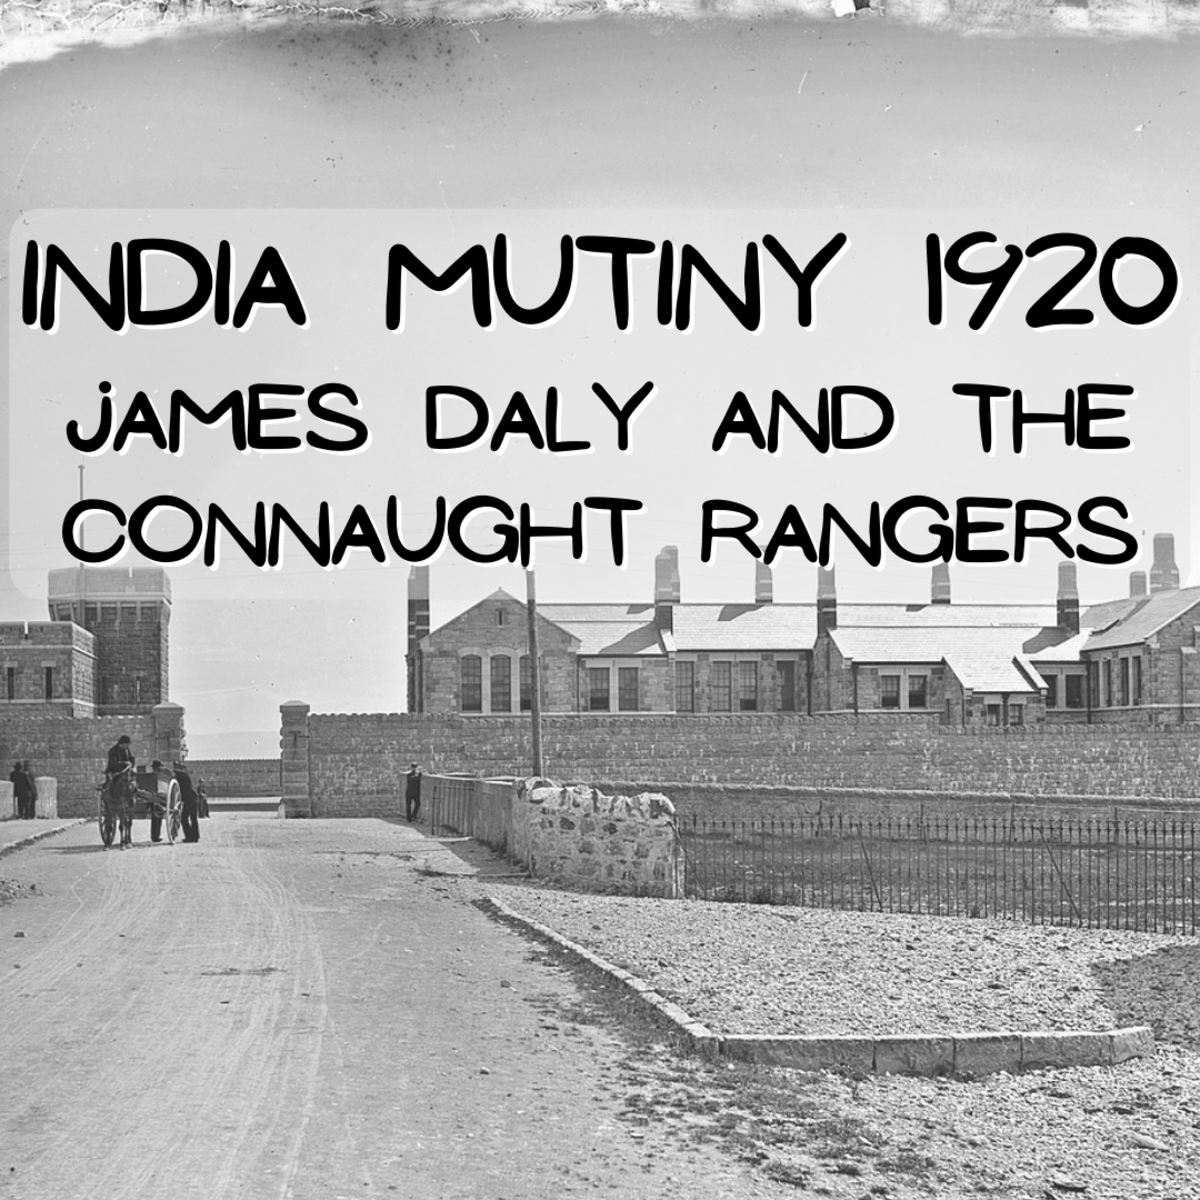 Irishman James Daly: Member of Connaught Rangers in 1920